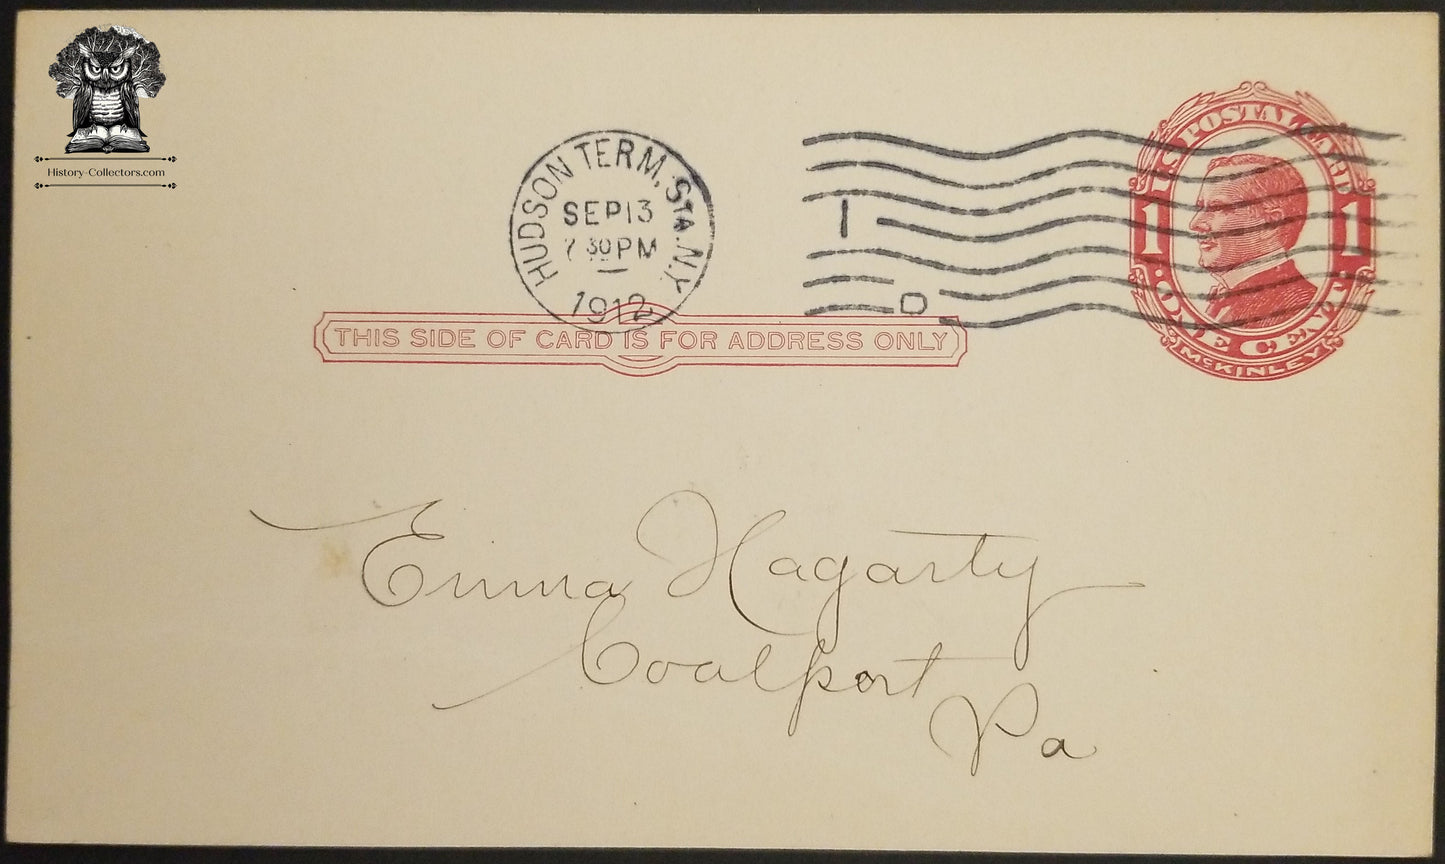 1912 Tonopah Extension Mining Company Financial Report Postcard - Church Street NY - One Cent McKinley Postal Card - Scott UX24 - Hudson Terminal Station Postal Cancel